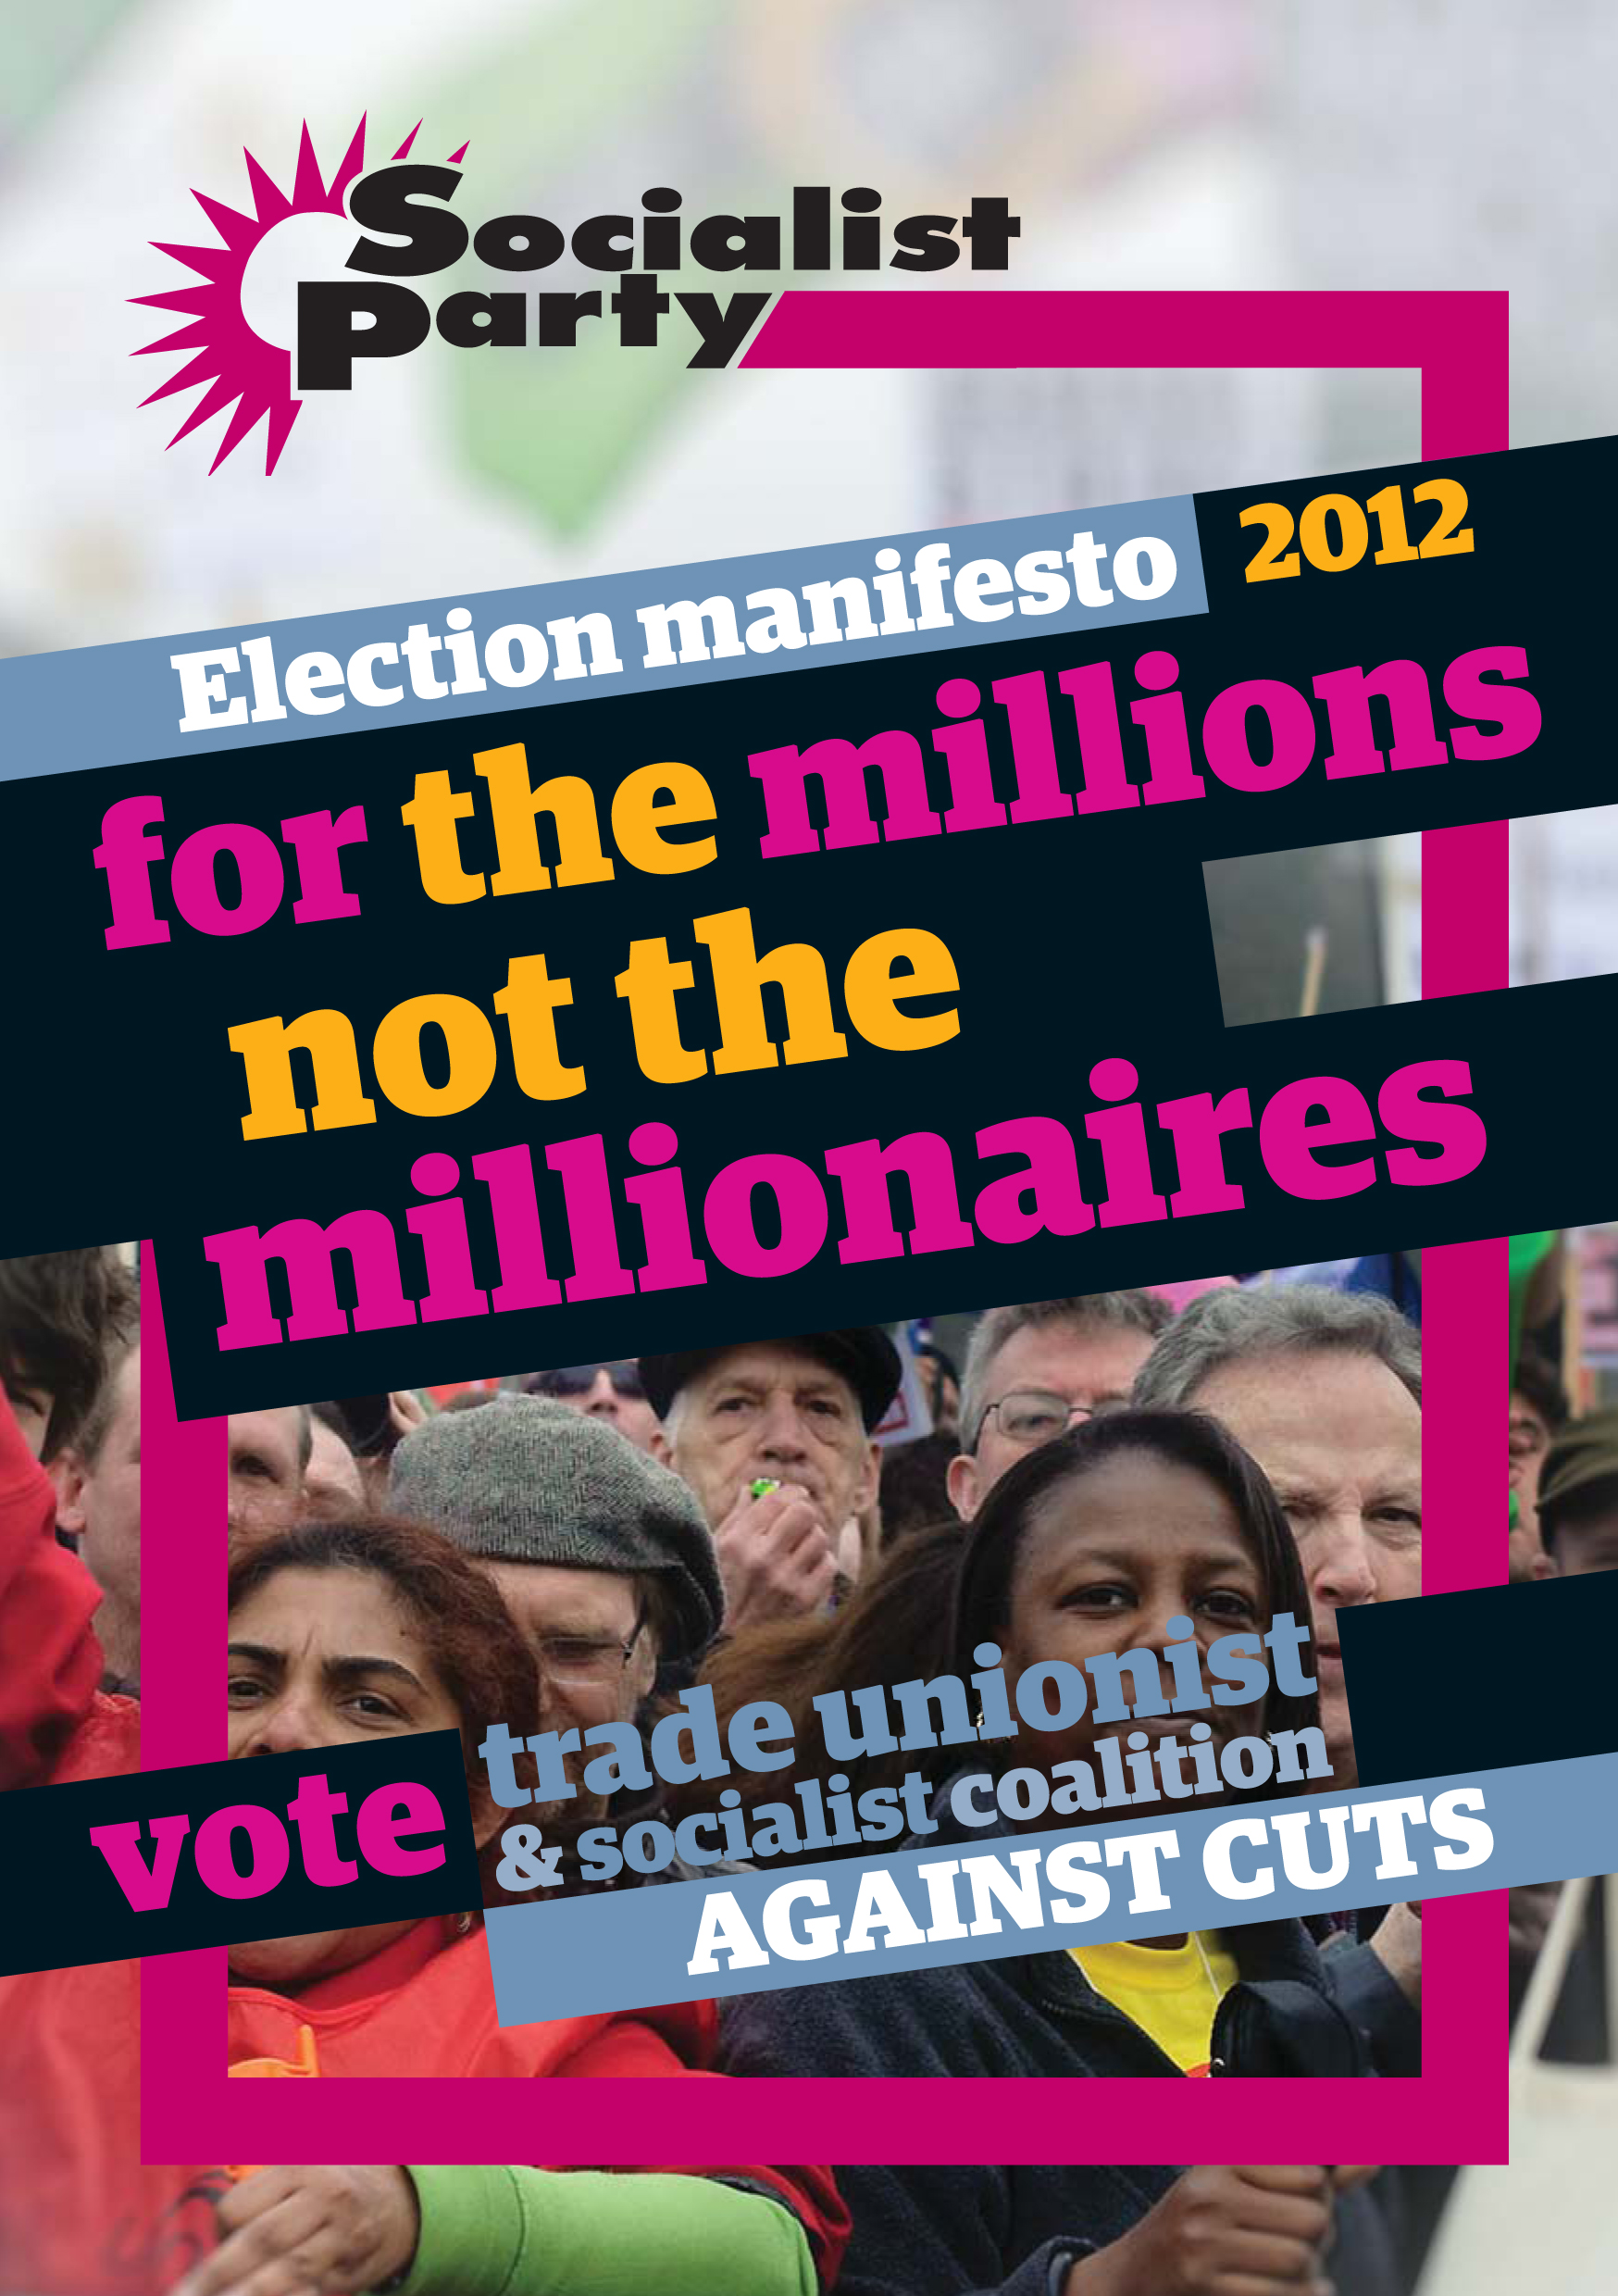 Socialist Party election manifesto 2012, credit: Paul Mattsson (uploaded 20/04/2012)